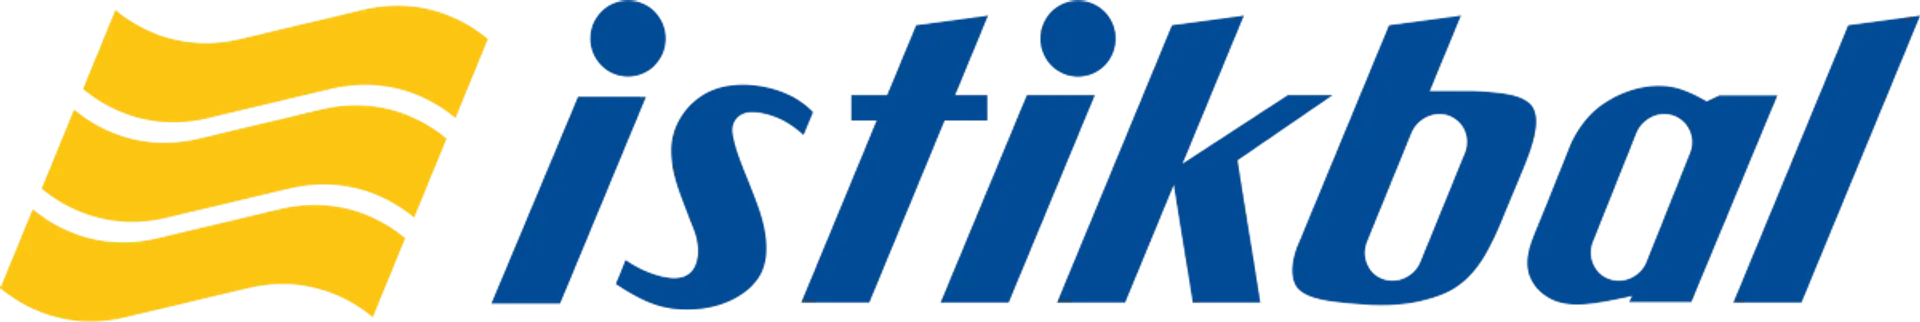 ISTIKBAL logo. Current weekly ad